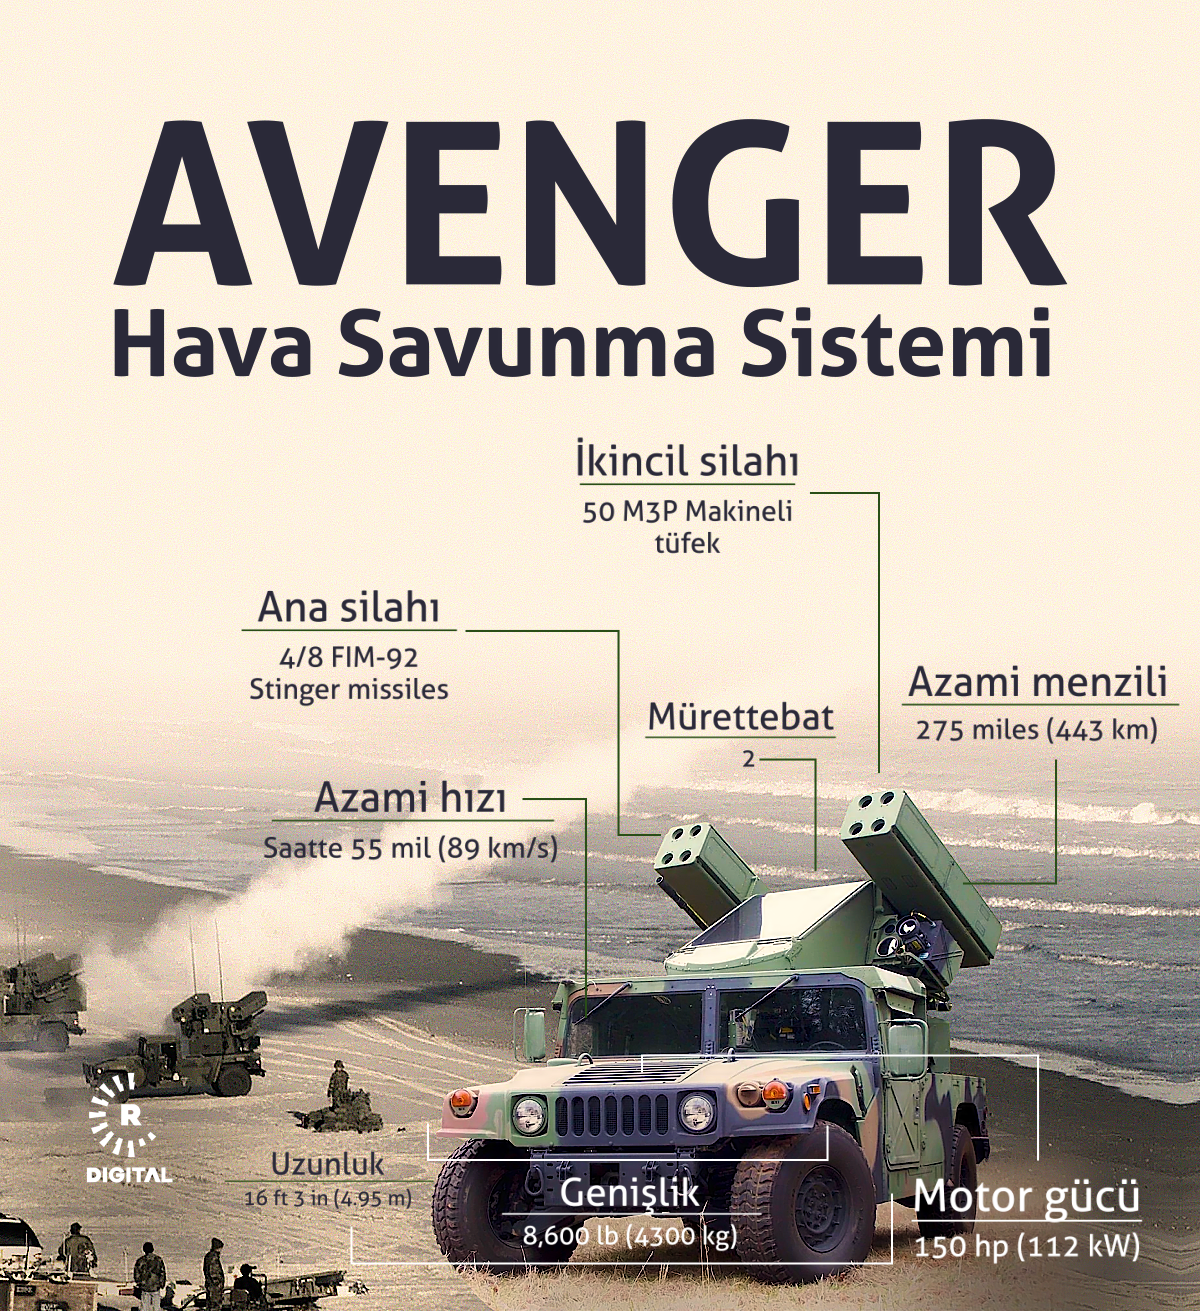 Foto: Avenger Hava Savunma Sistemi'ne ait infografik / Grafik tasarım: Mehmed Alsafar